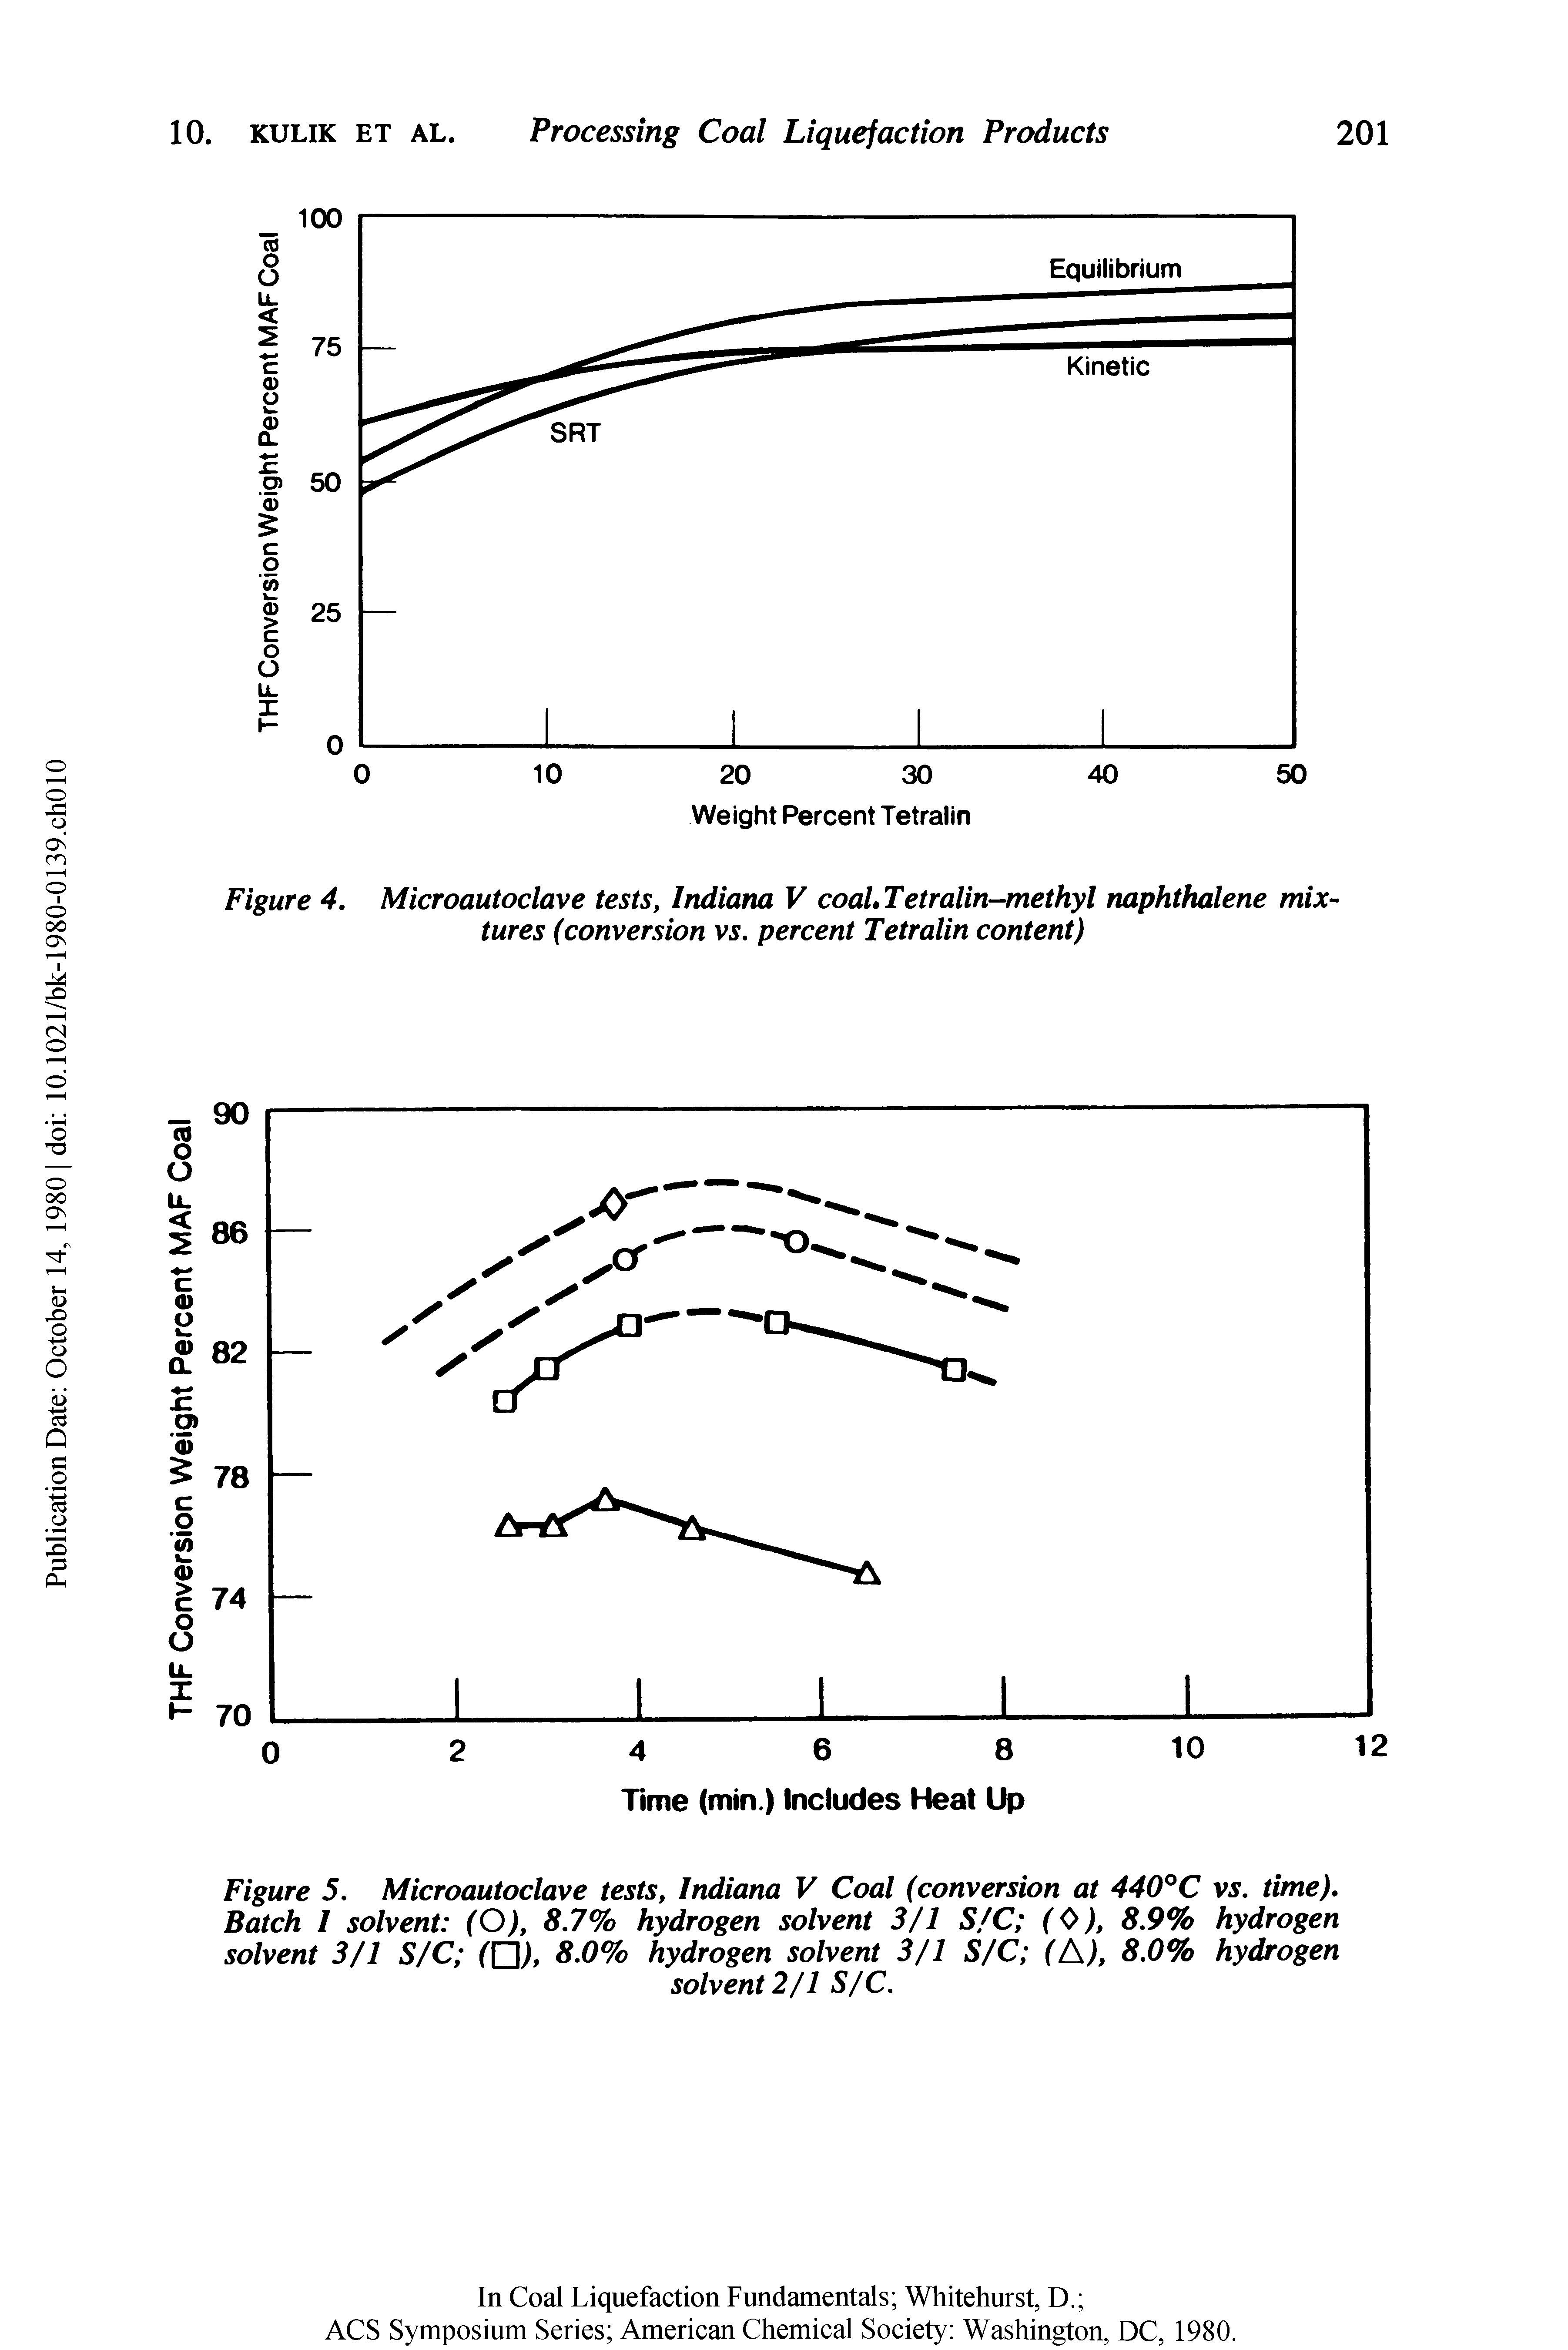 Figure 4. Microautoclave tests, Indiana V coal, Tetralin-methyl naphthalene mixtures (conversion vs. percent Tetralin content)...